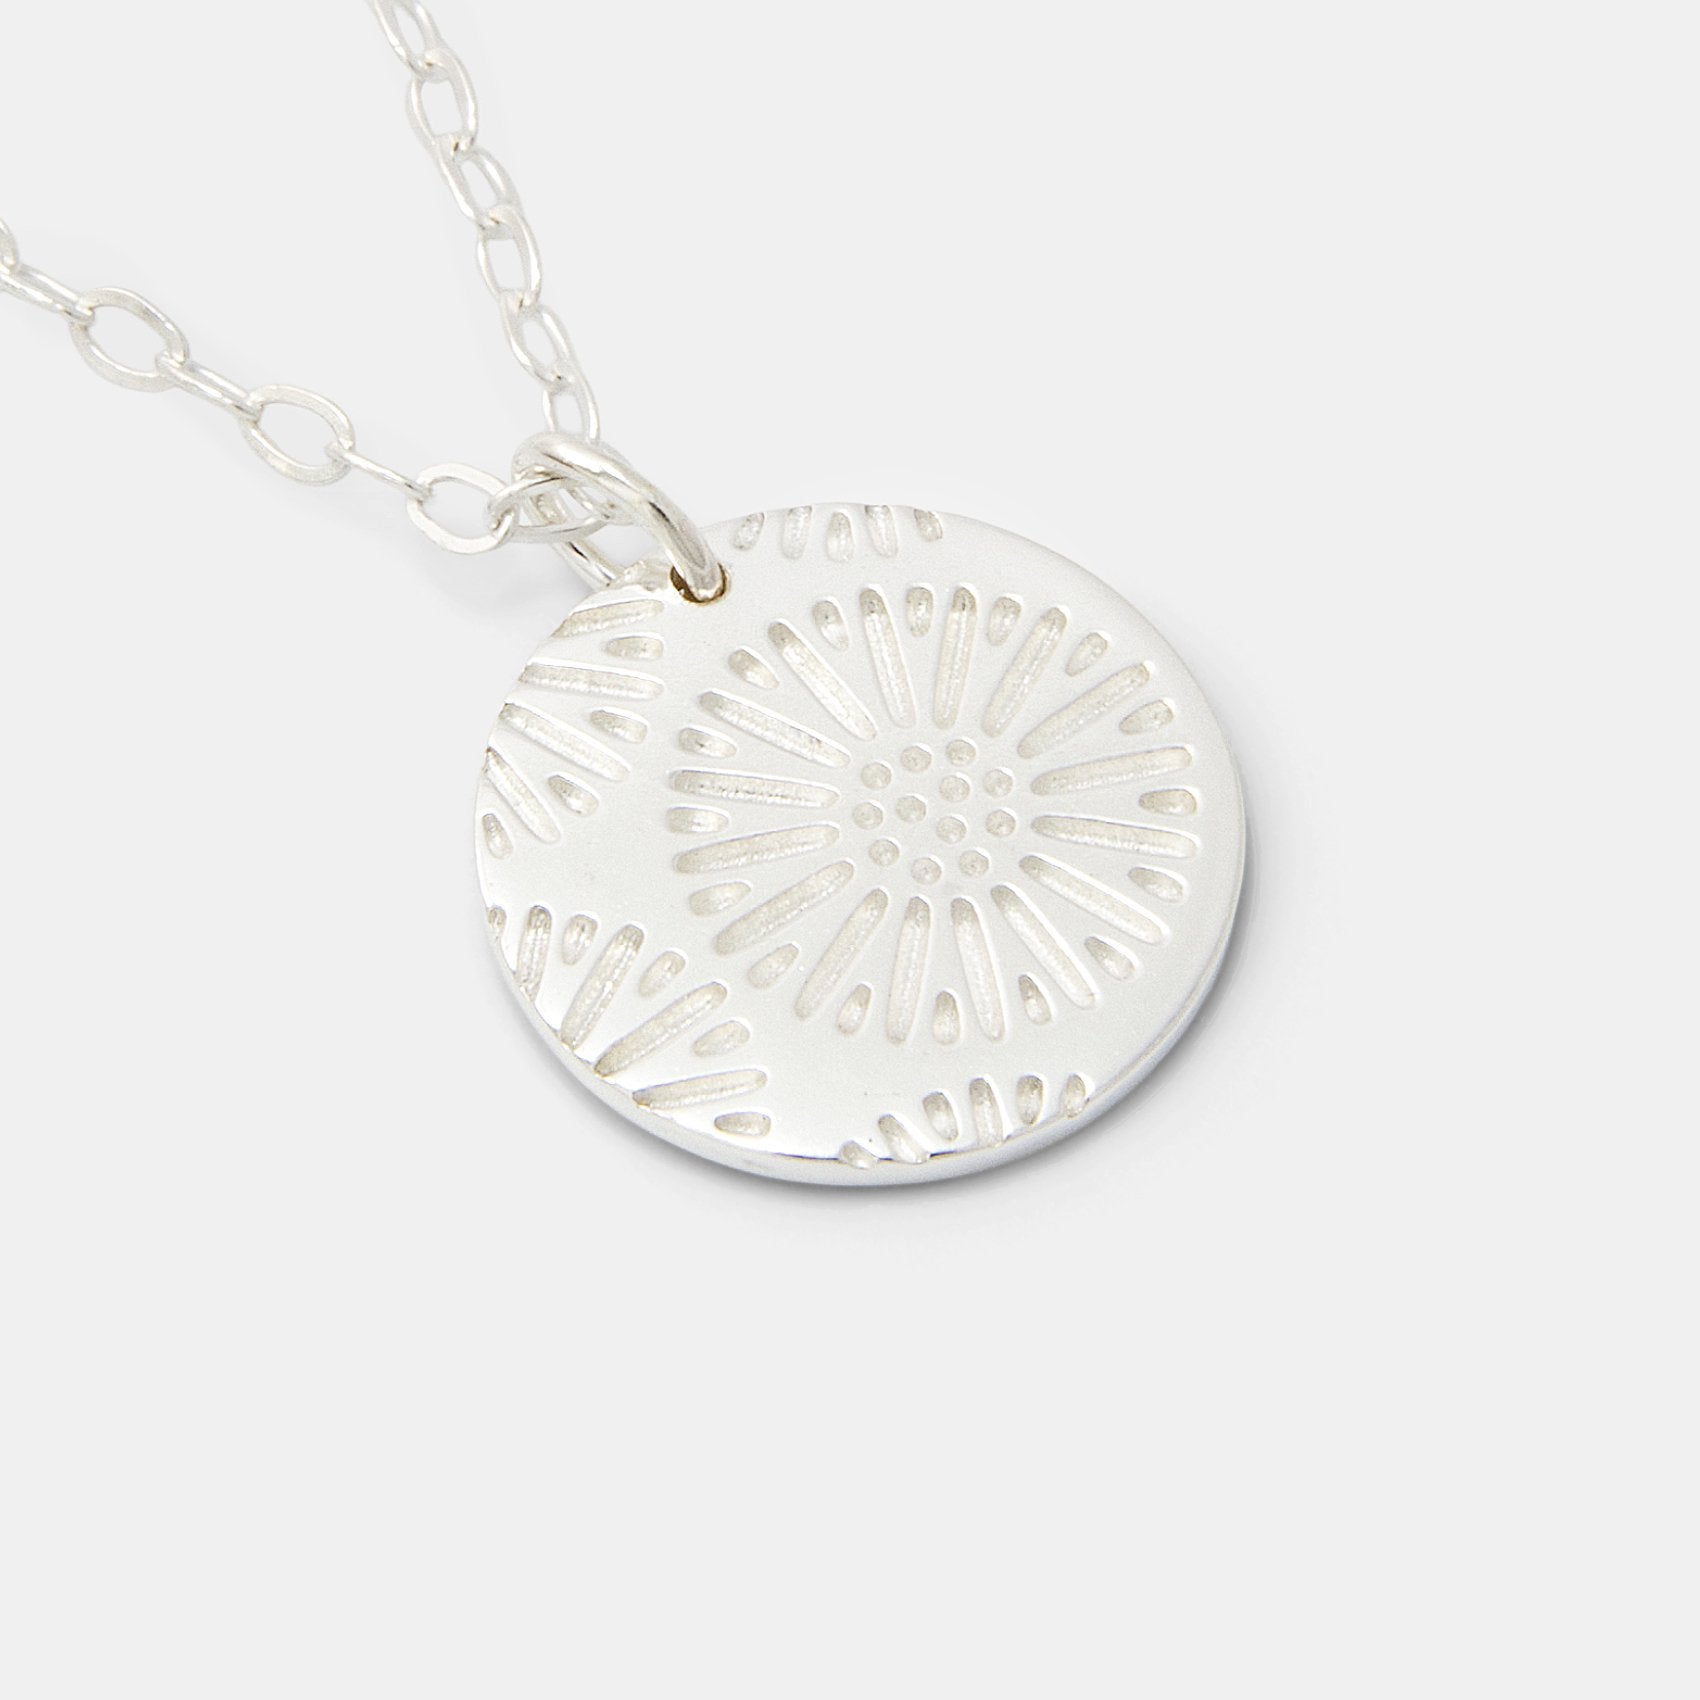 Coral texture silver pendant necklace - Simone Walsh Jewellery Australia